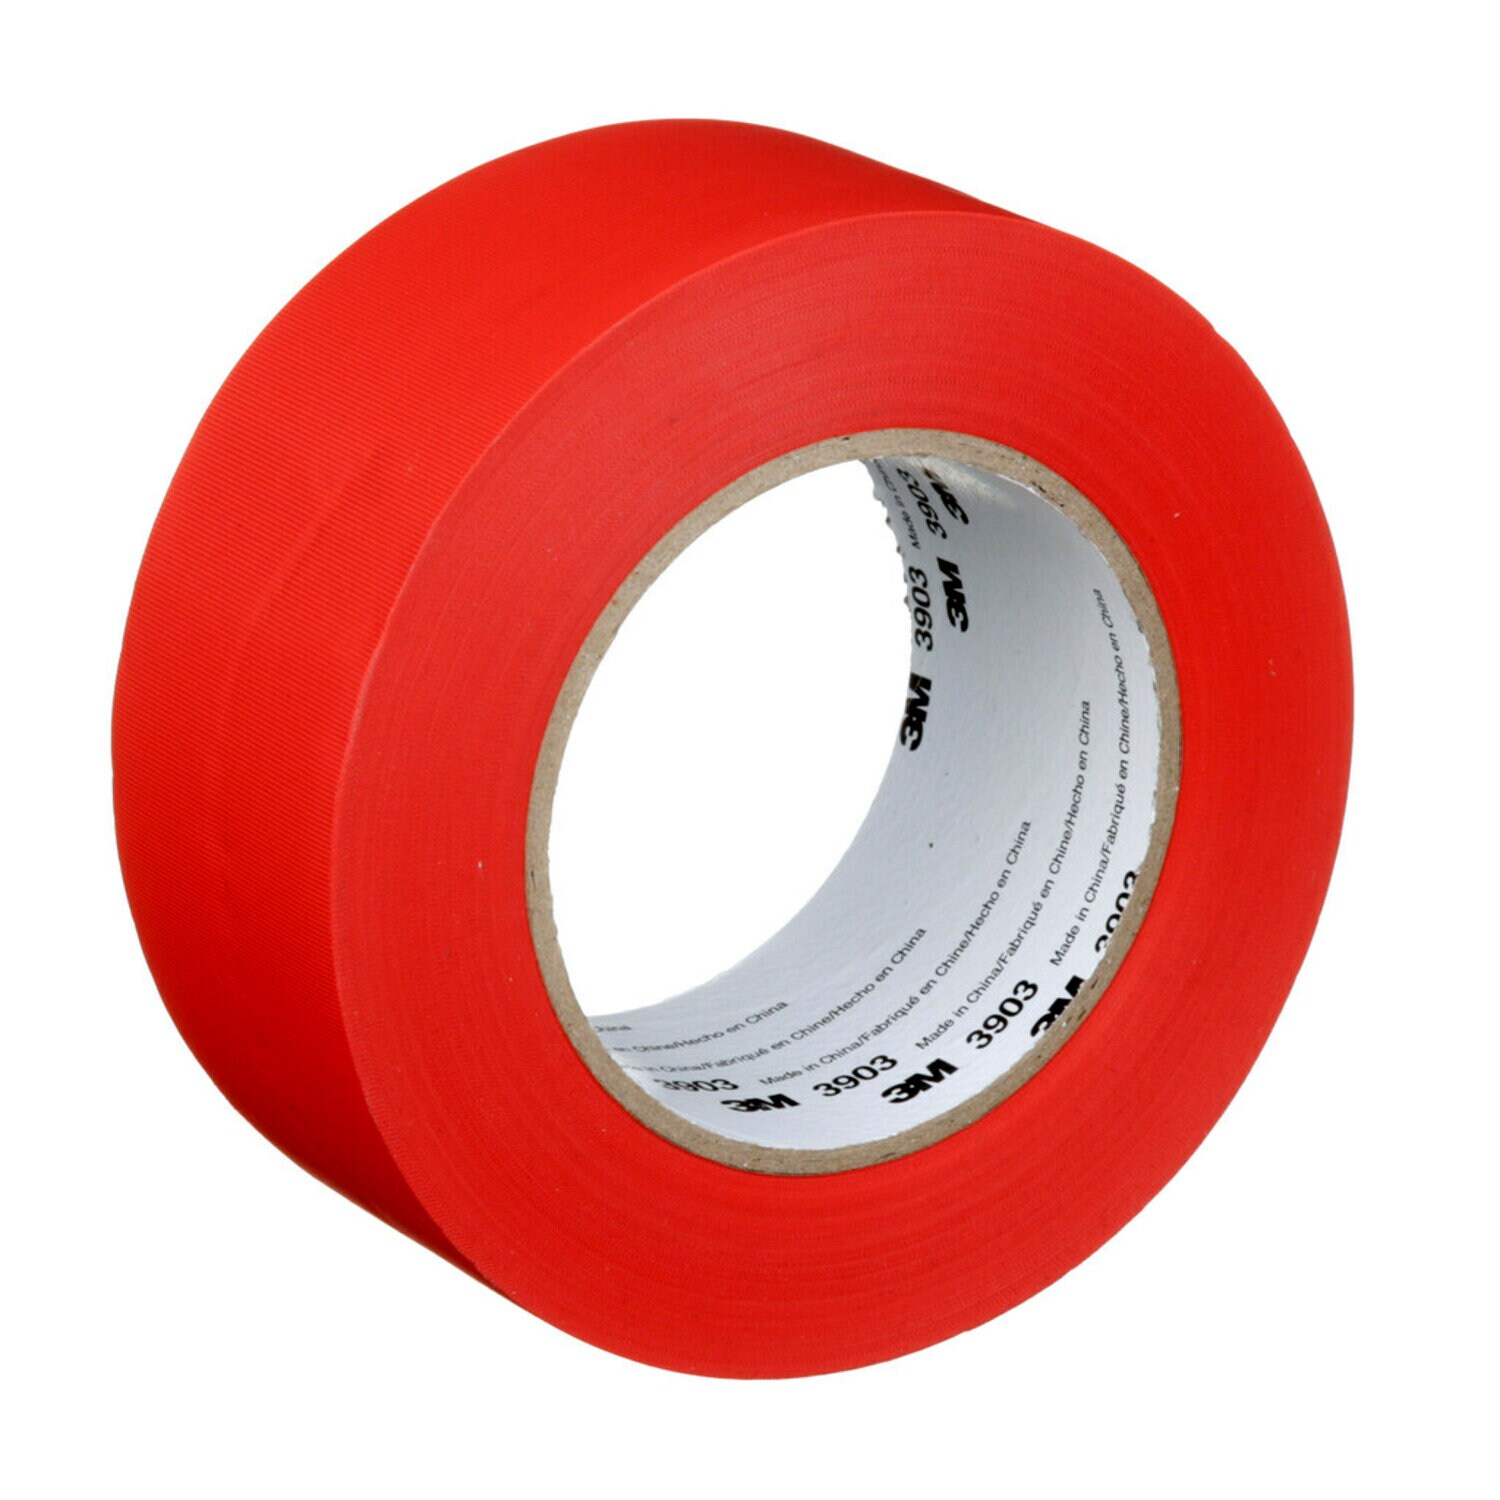 7100148743 - 3M Vinyl Duct Tape 3903, Red, 2 in x 50 yd, 6.5 mil, 24 Rolls/Case,